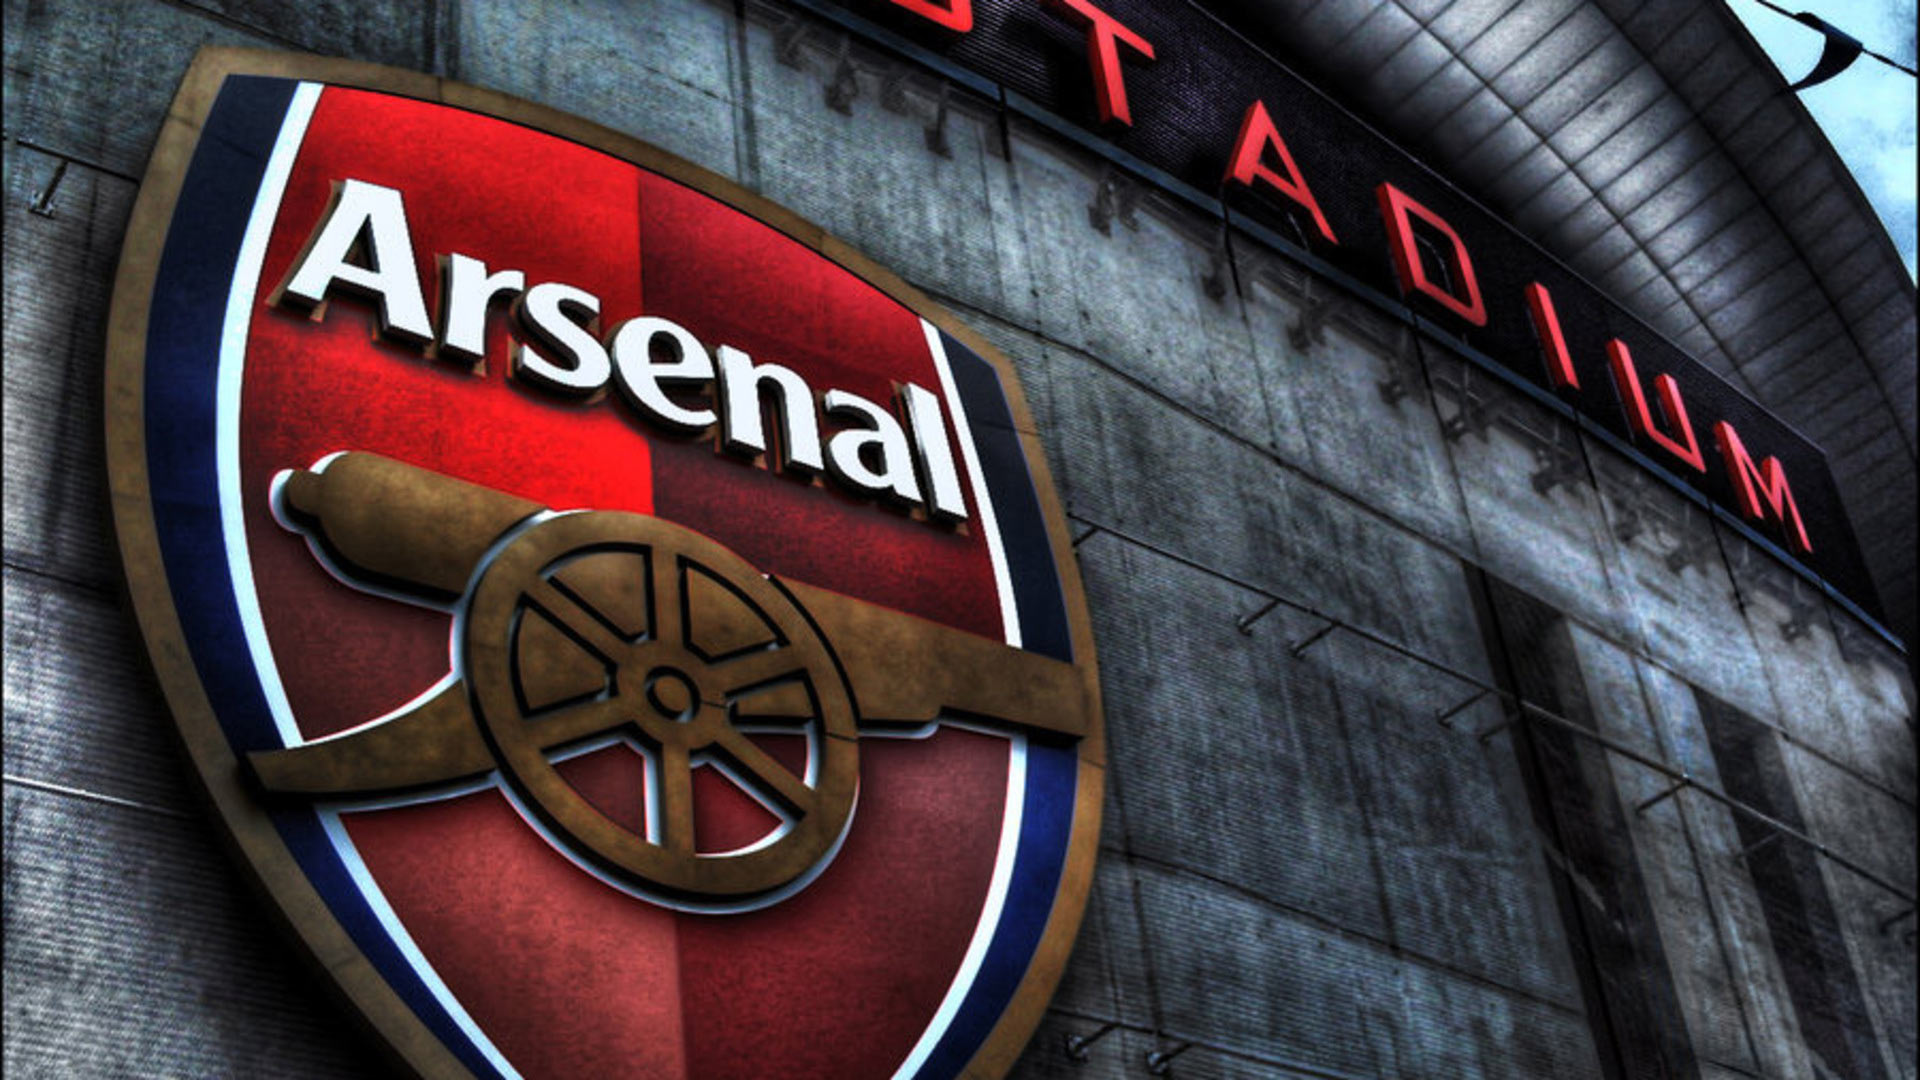 Arsenal Wallpaper Background - Emirates Stadium - 1920x1080 Wallpaper -  